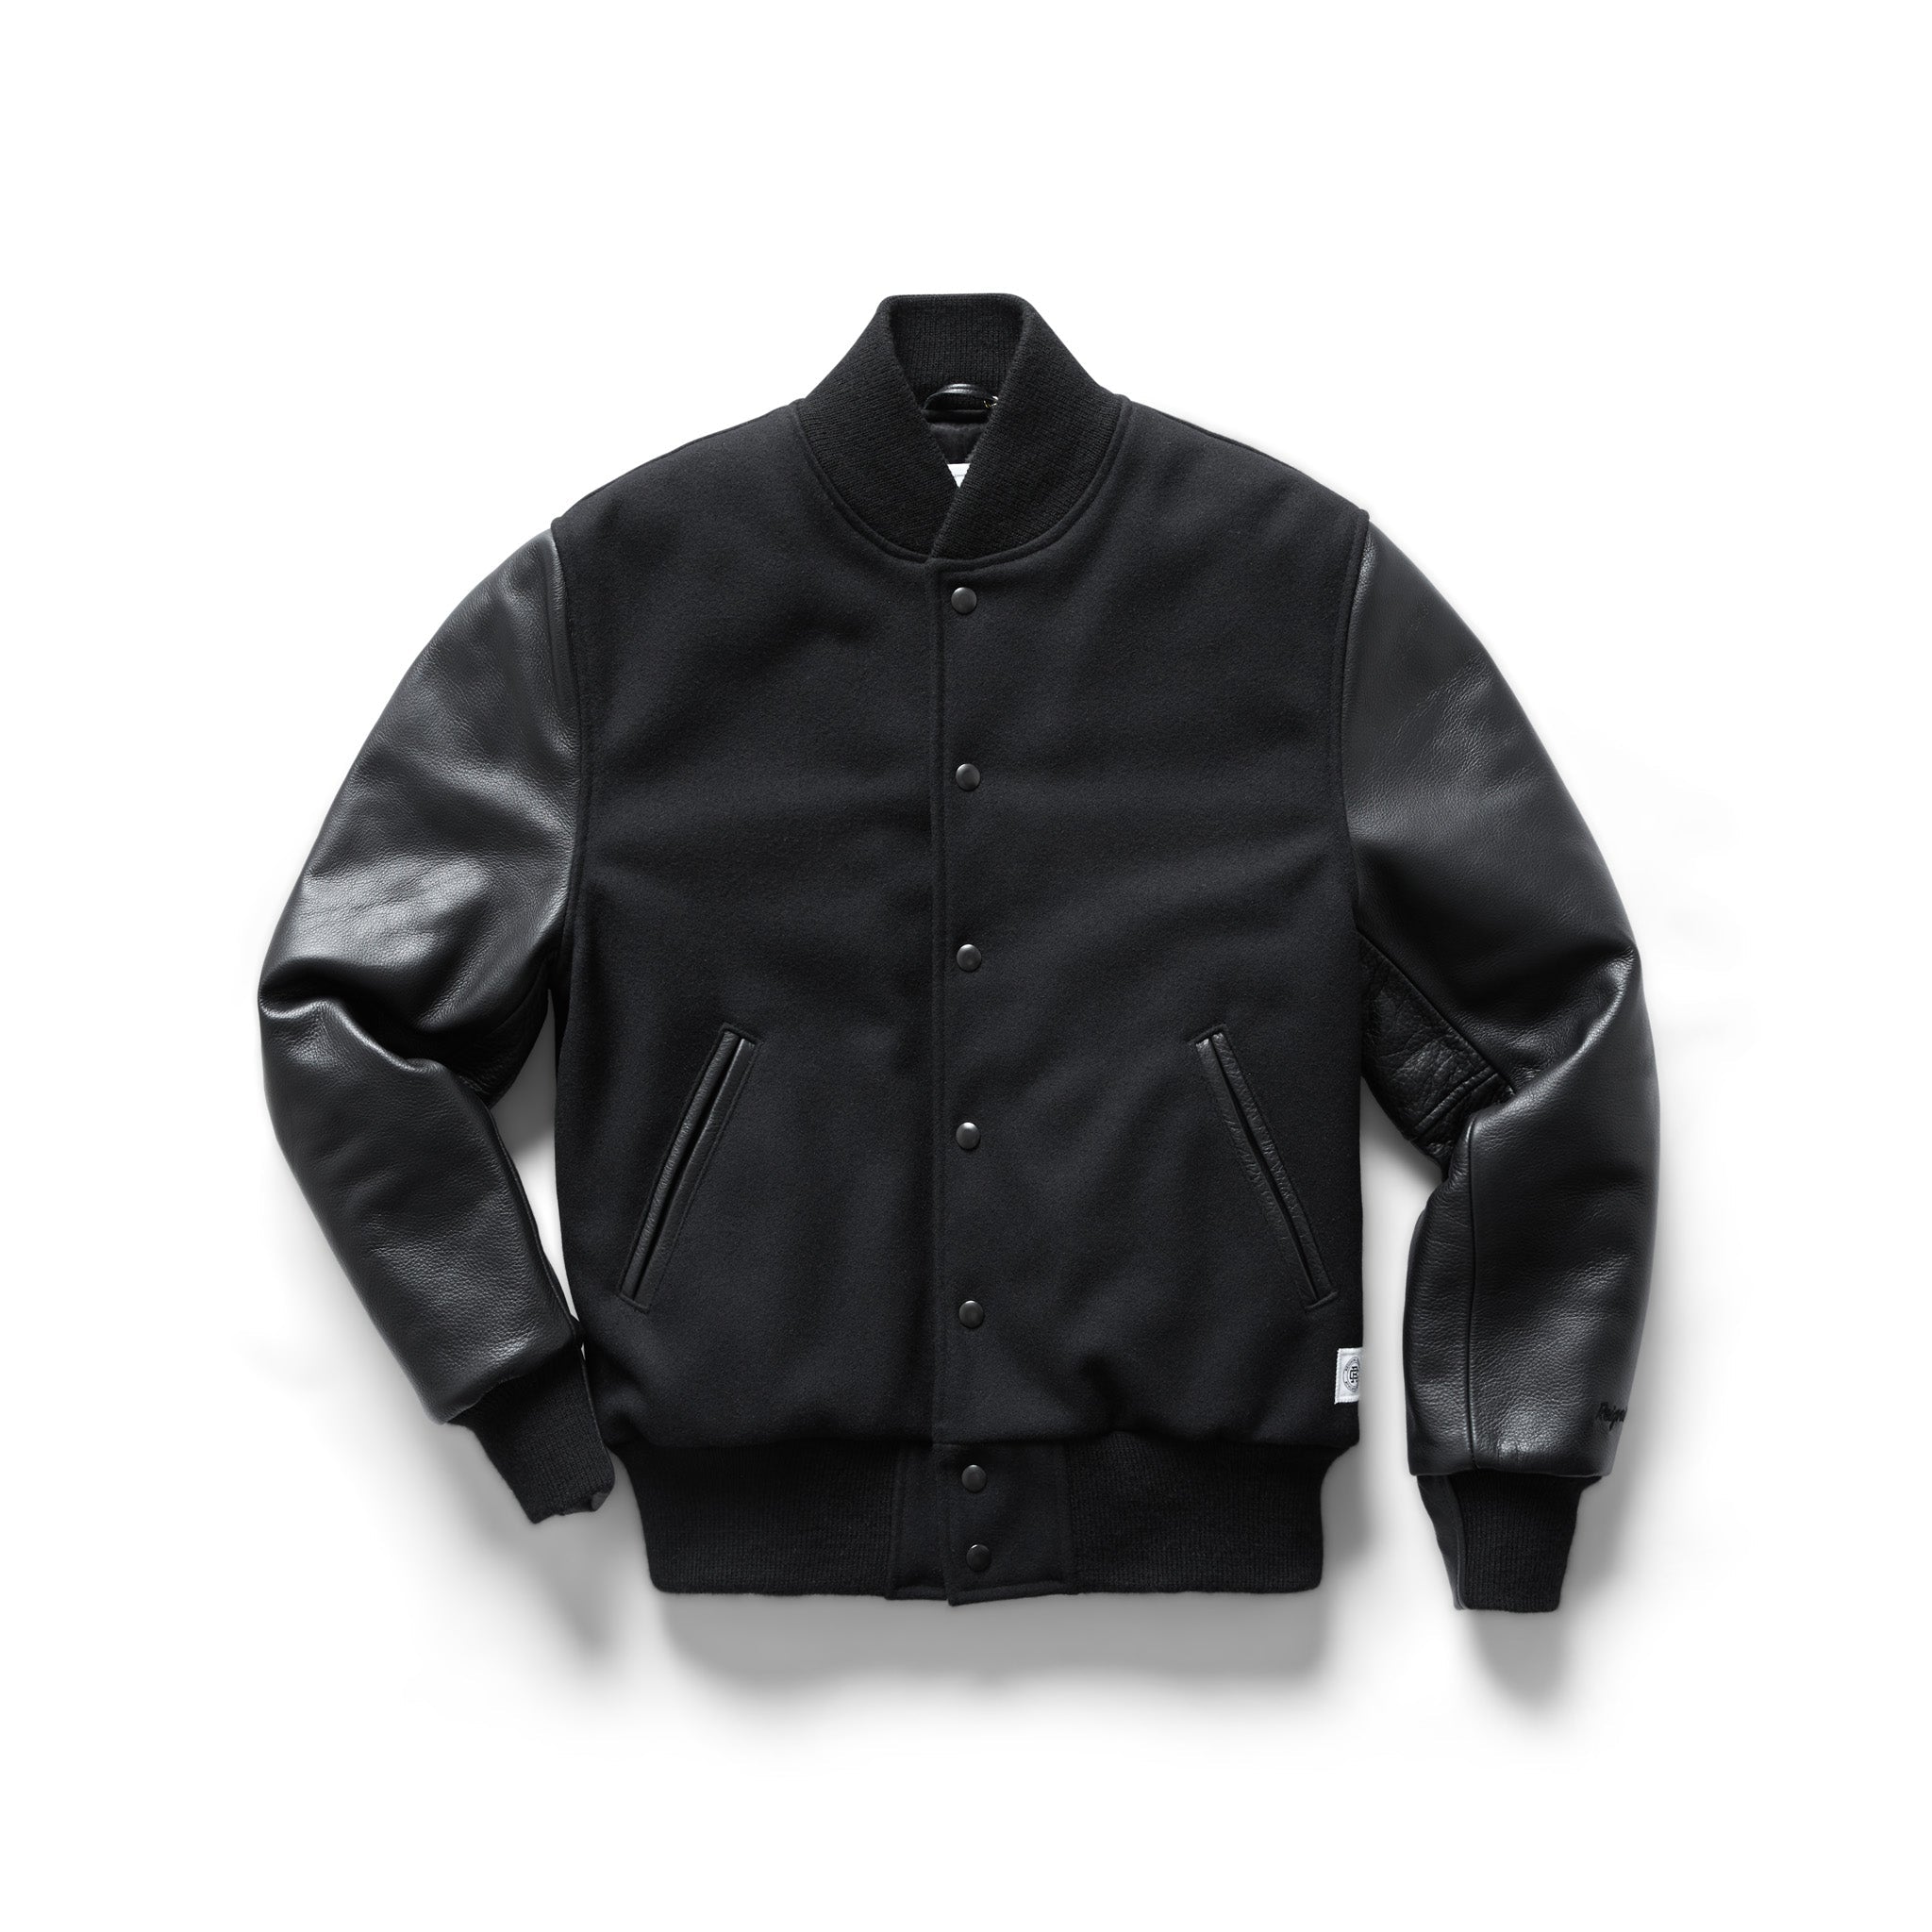 OFF-WHITE Leather Varsity Jacket in Grey & Multi